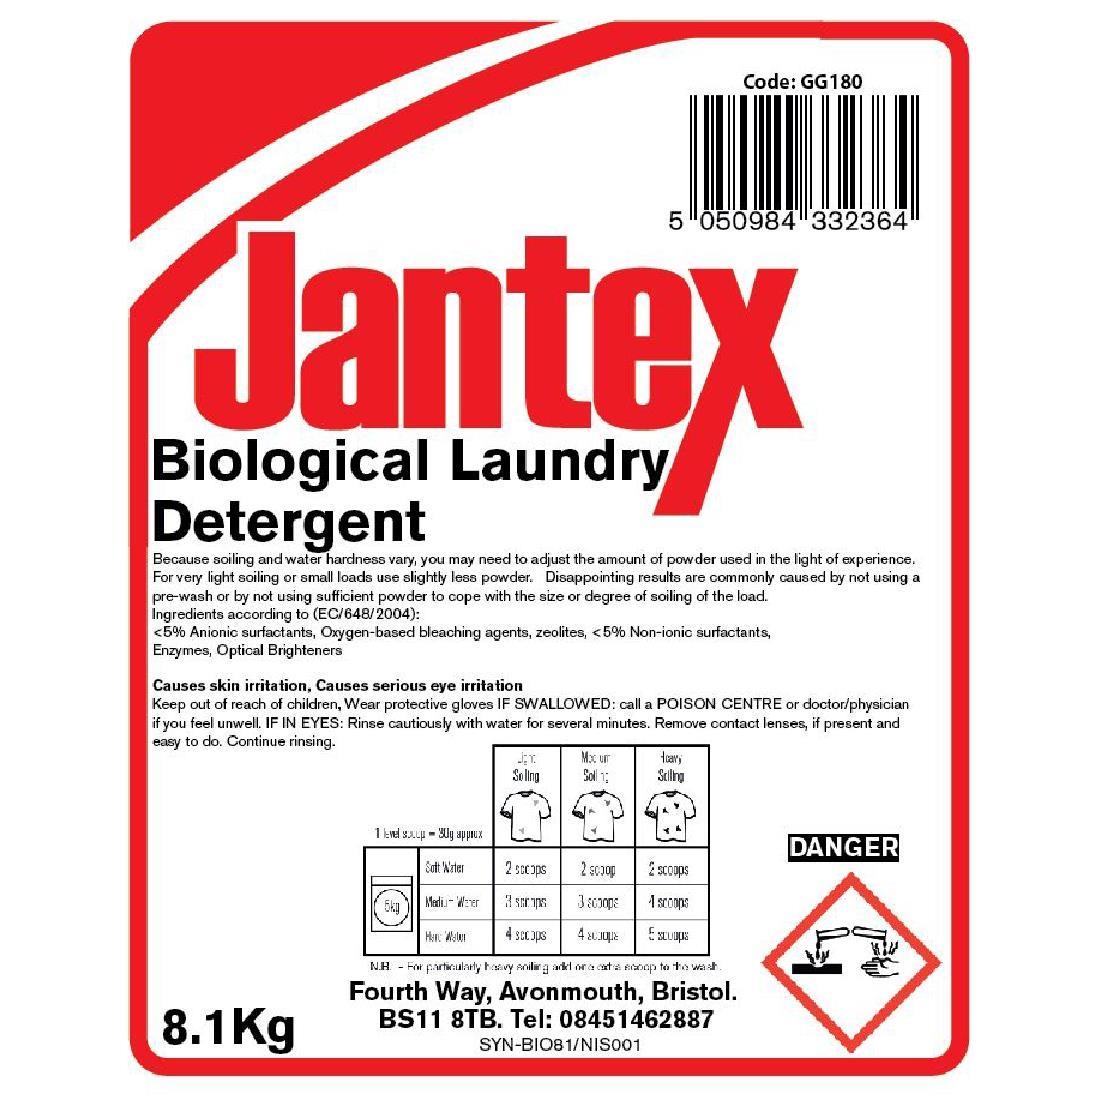 Jantex Biological Laundry Detergent Powder 8.1kg - GG180  - 3